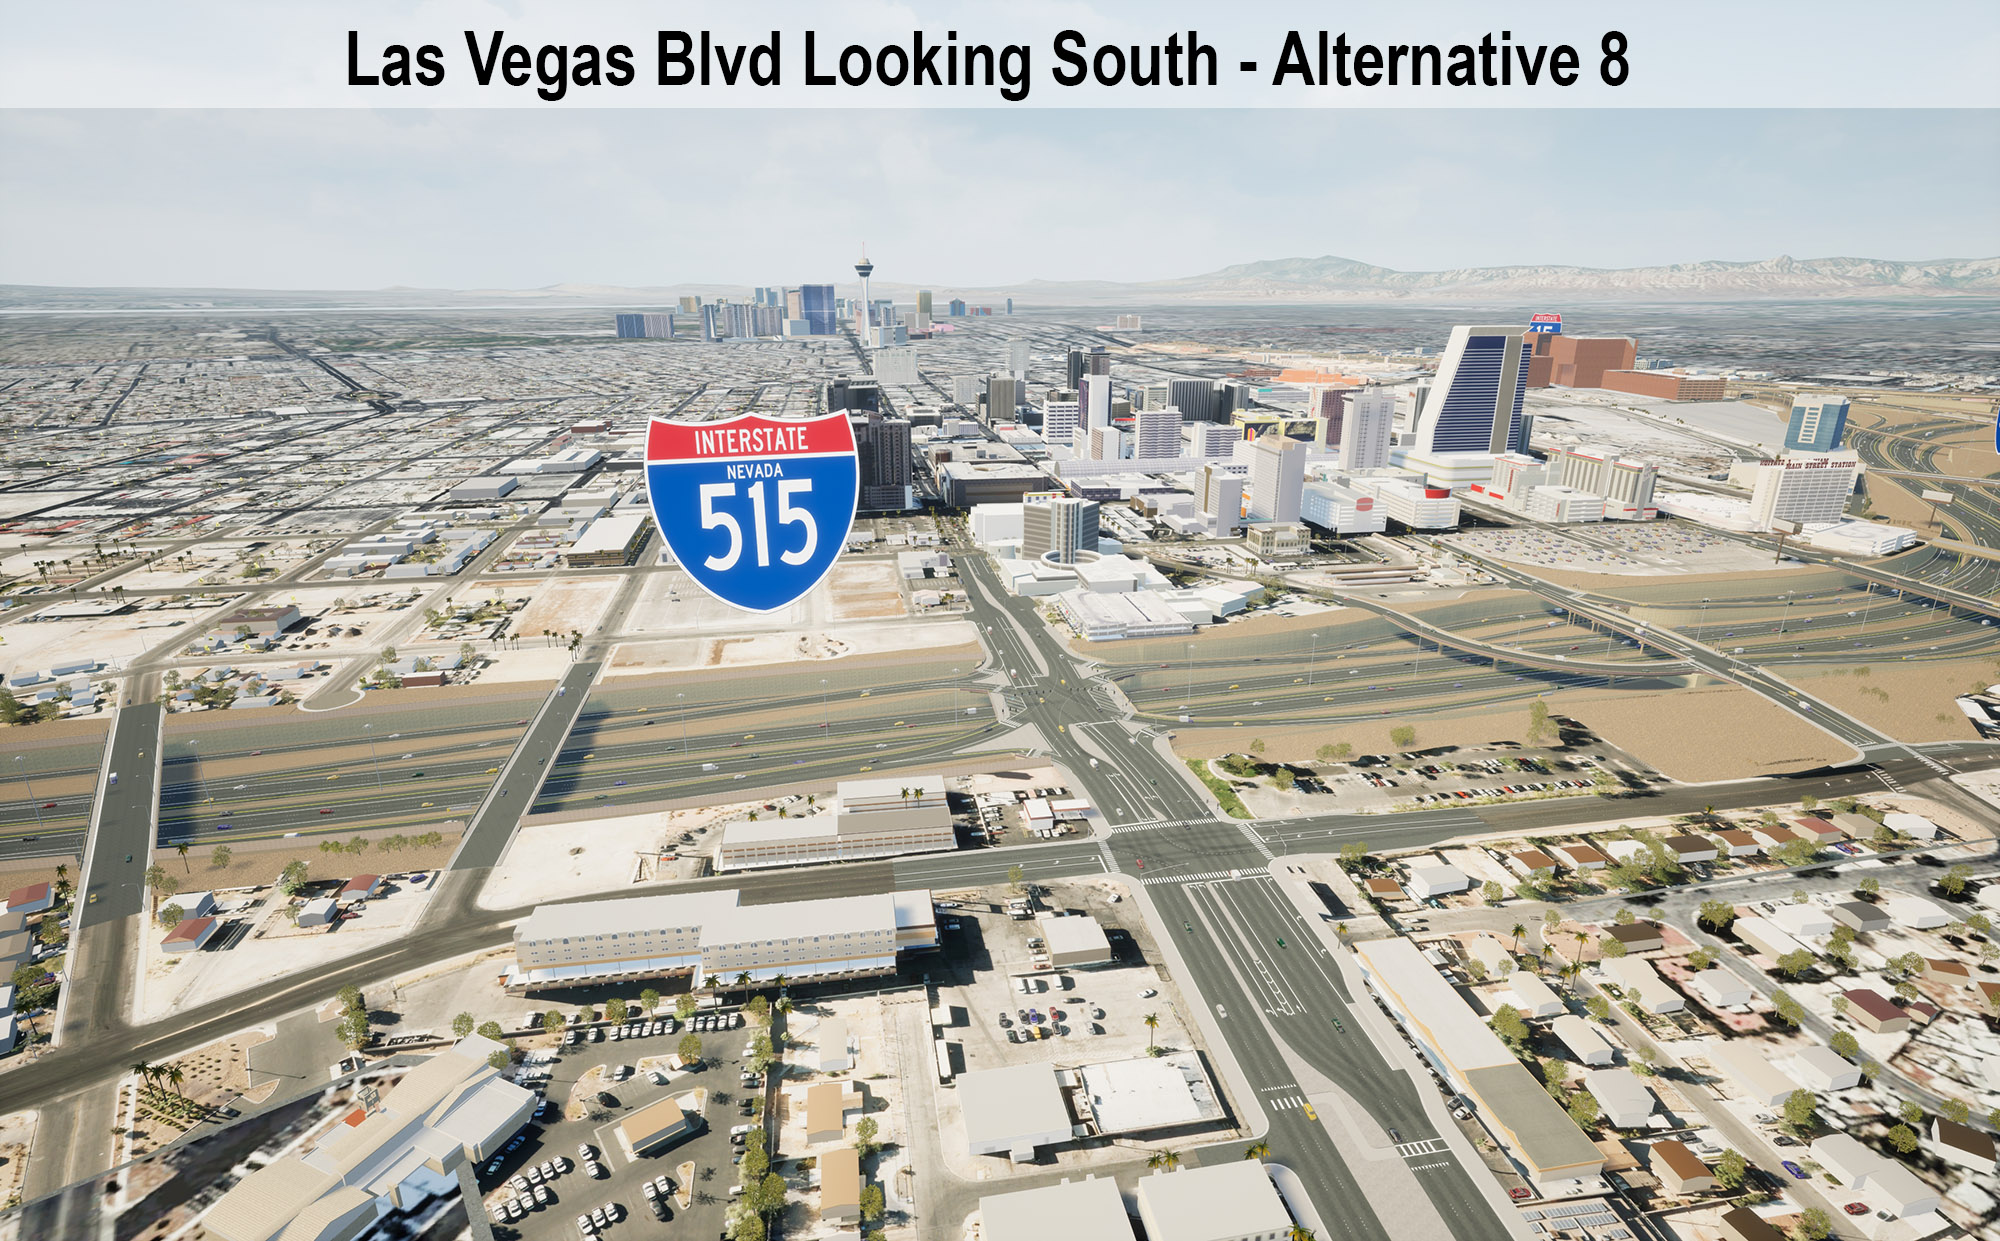 Las Vegas Blvd Looking South - Alternative 8